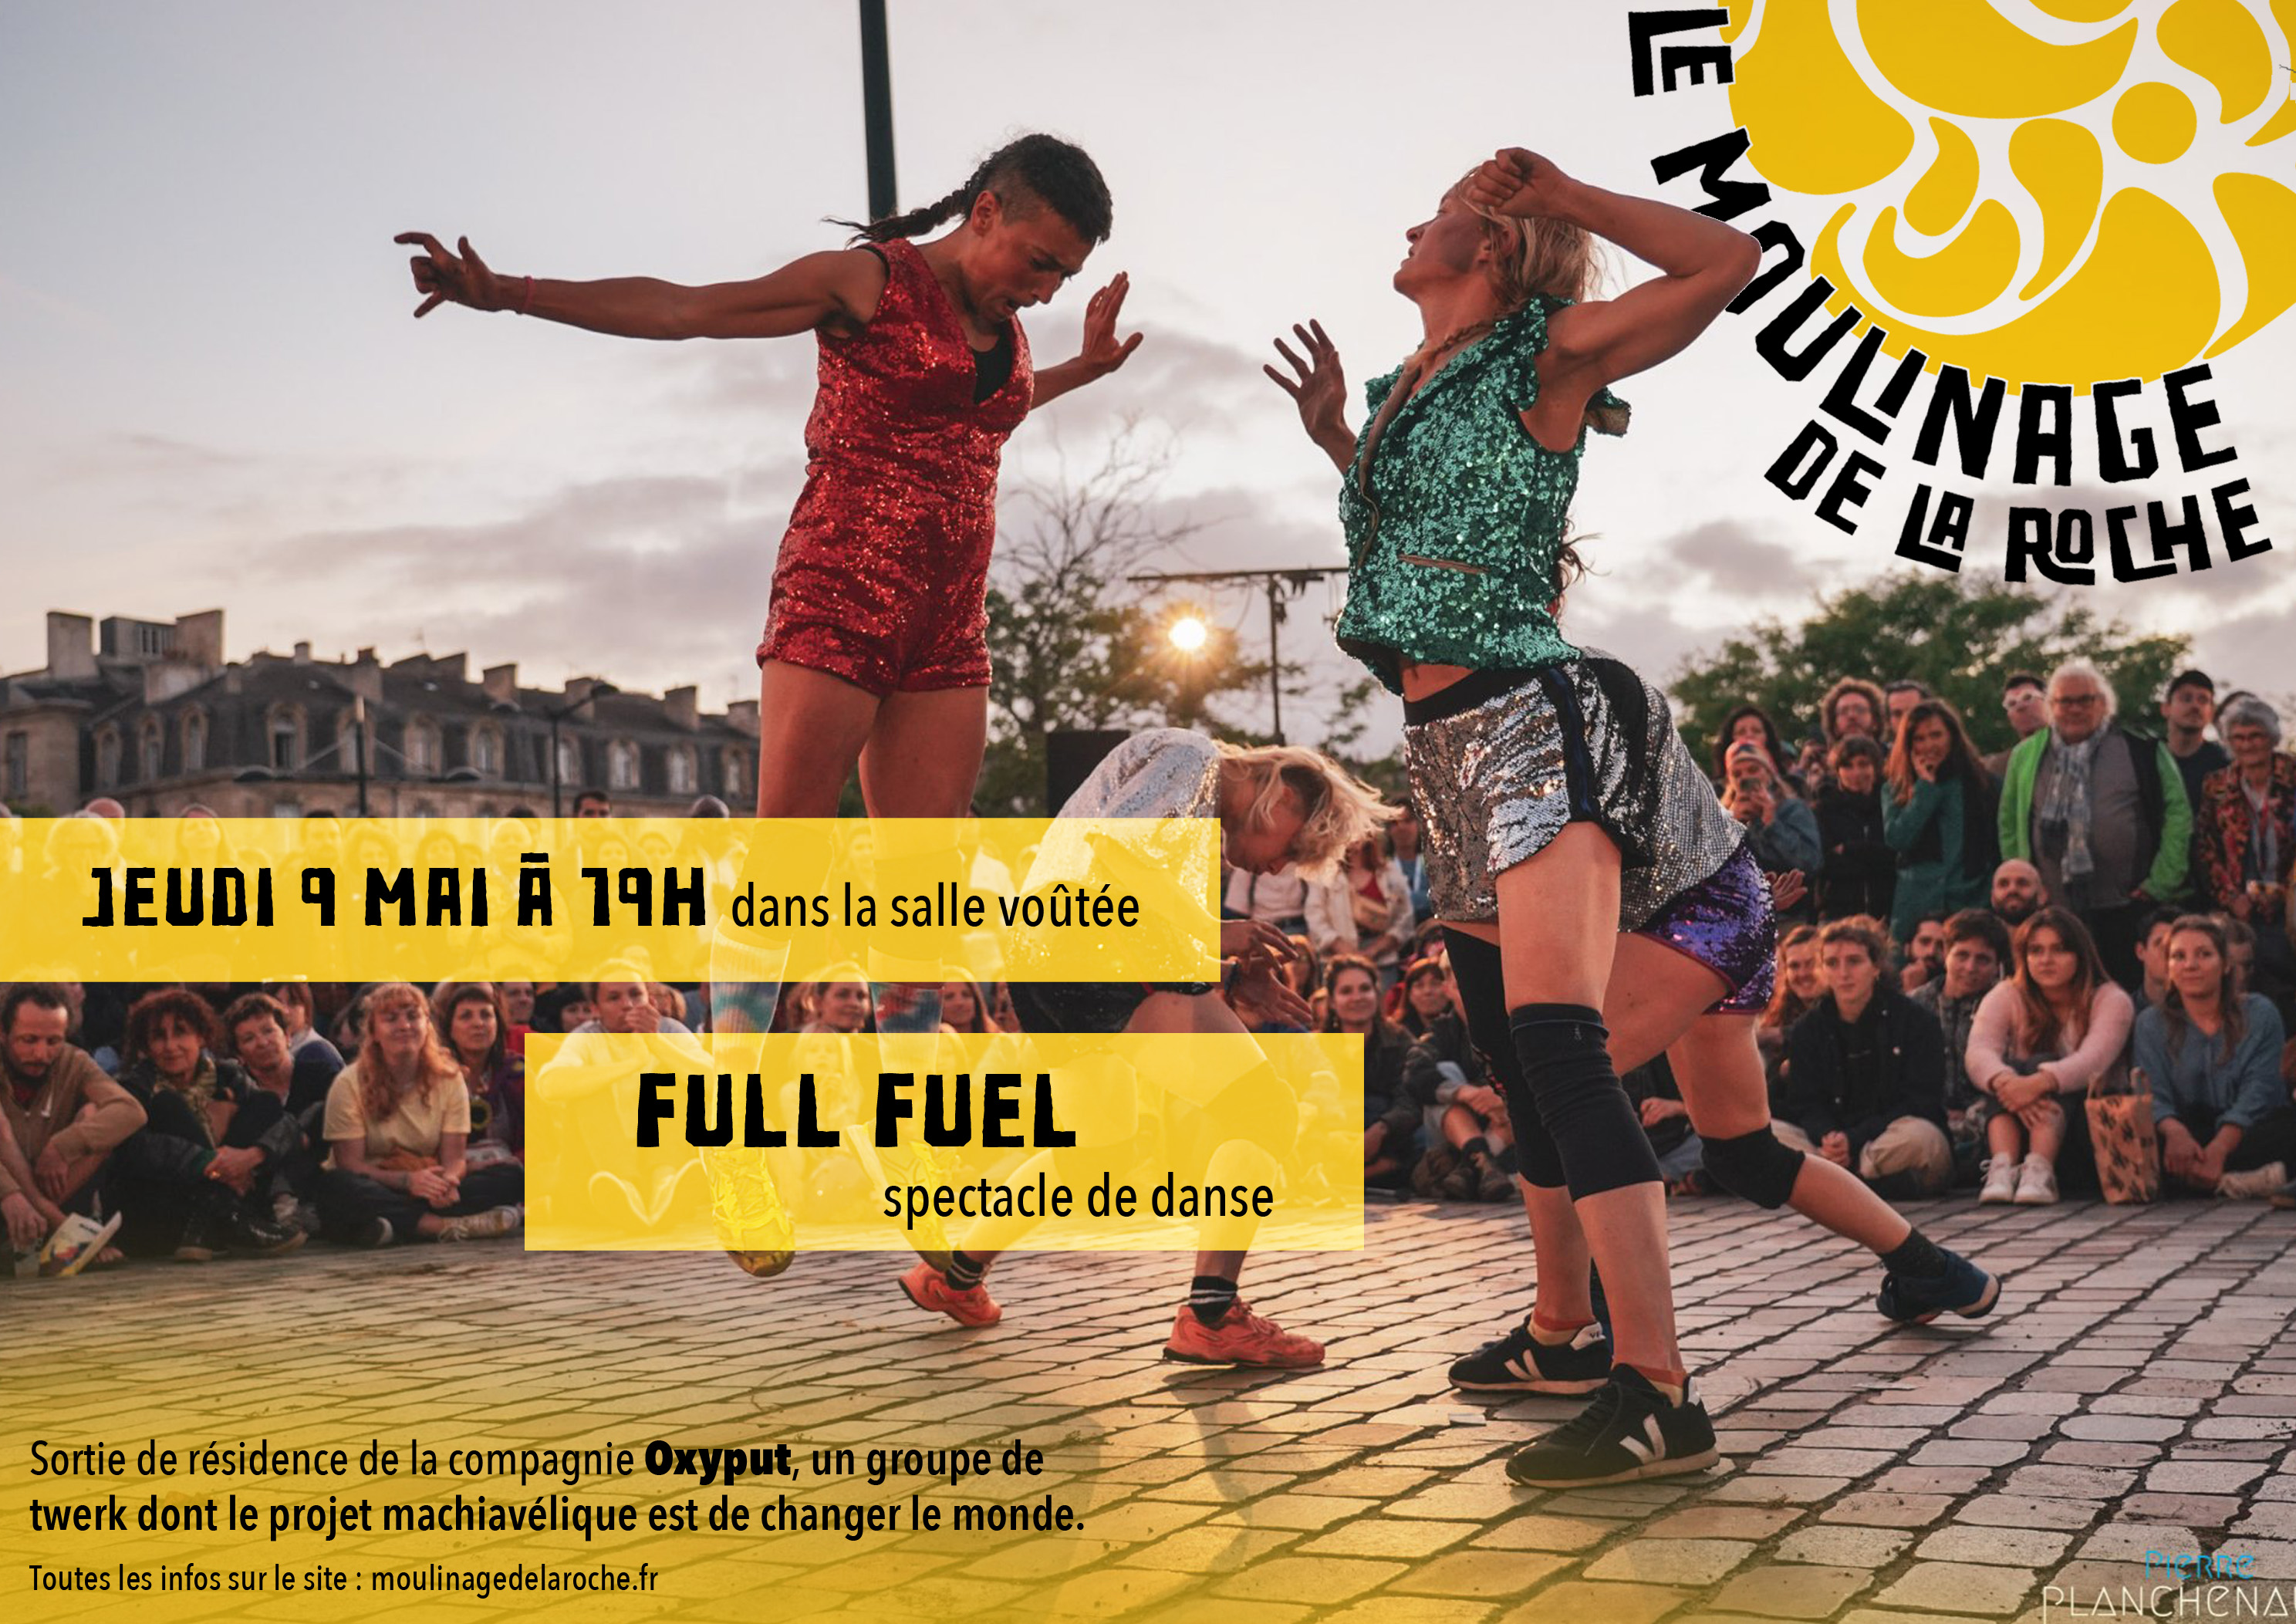 Alle leuke evenementen! : Spectacle de danse : Full Fuel